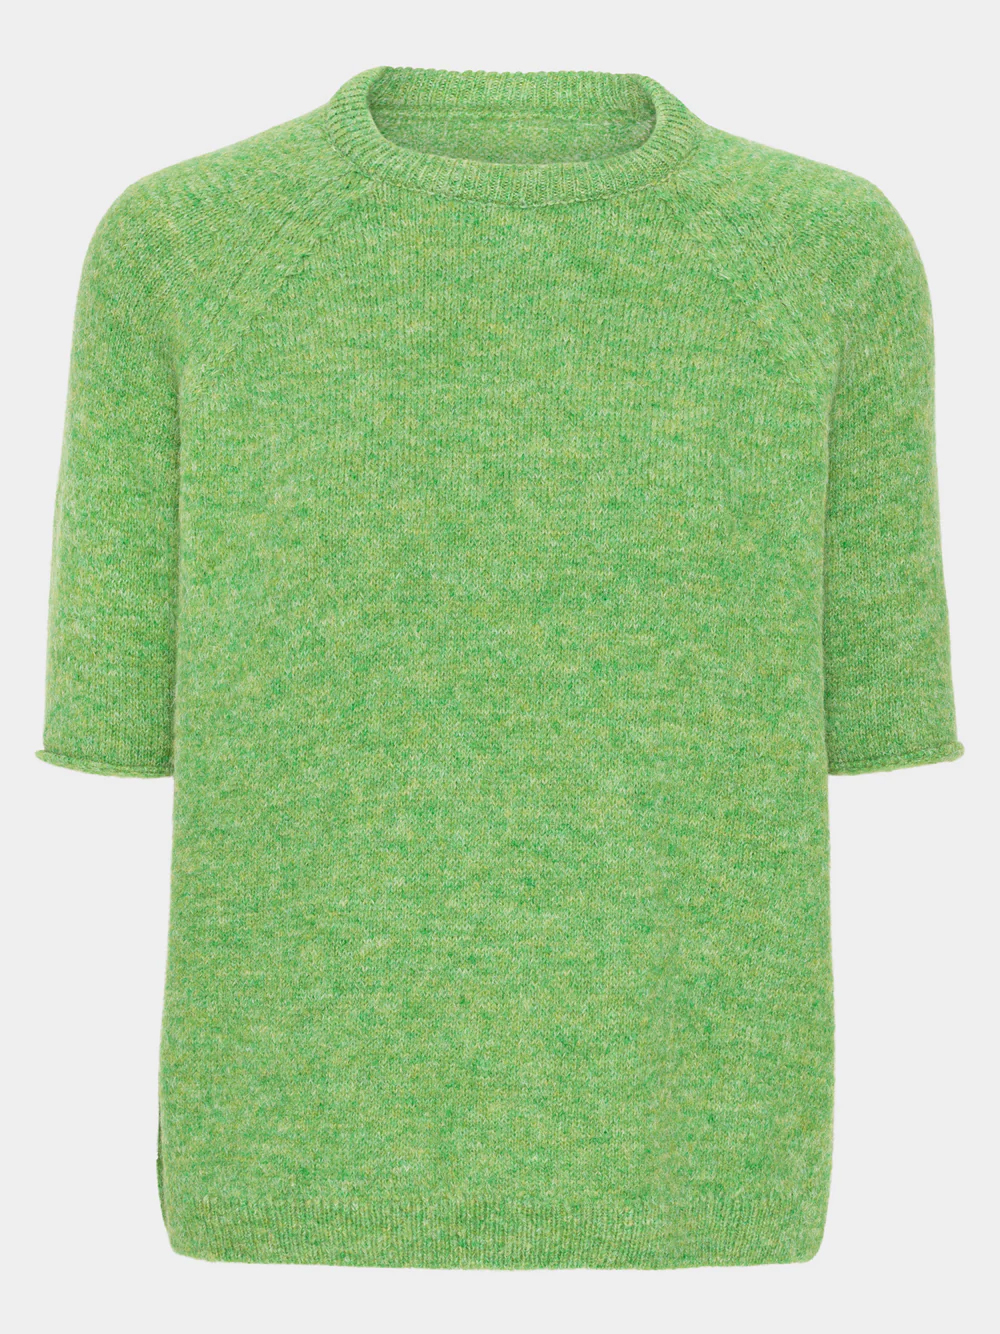 nice-and-soft-short-sleeve-knit-cy2370-green-1-1000x-kopier.jpg